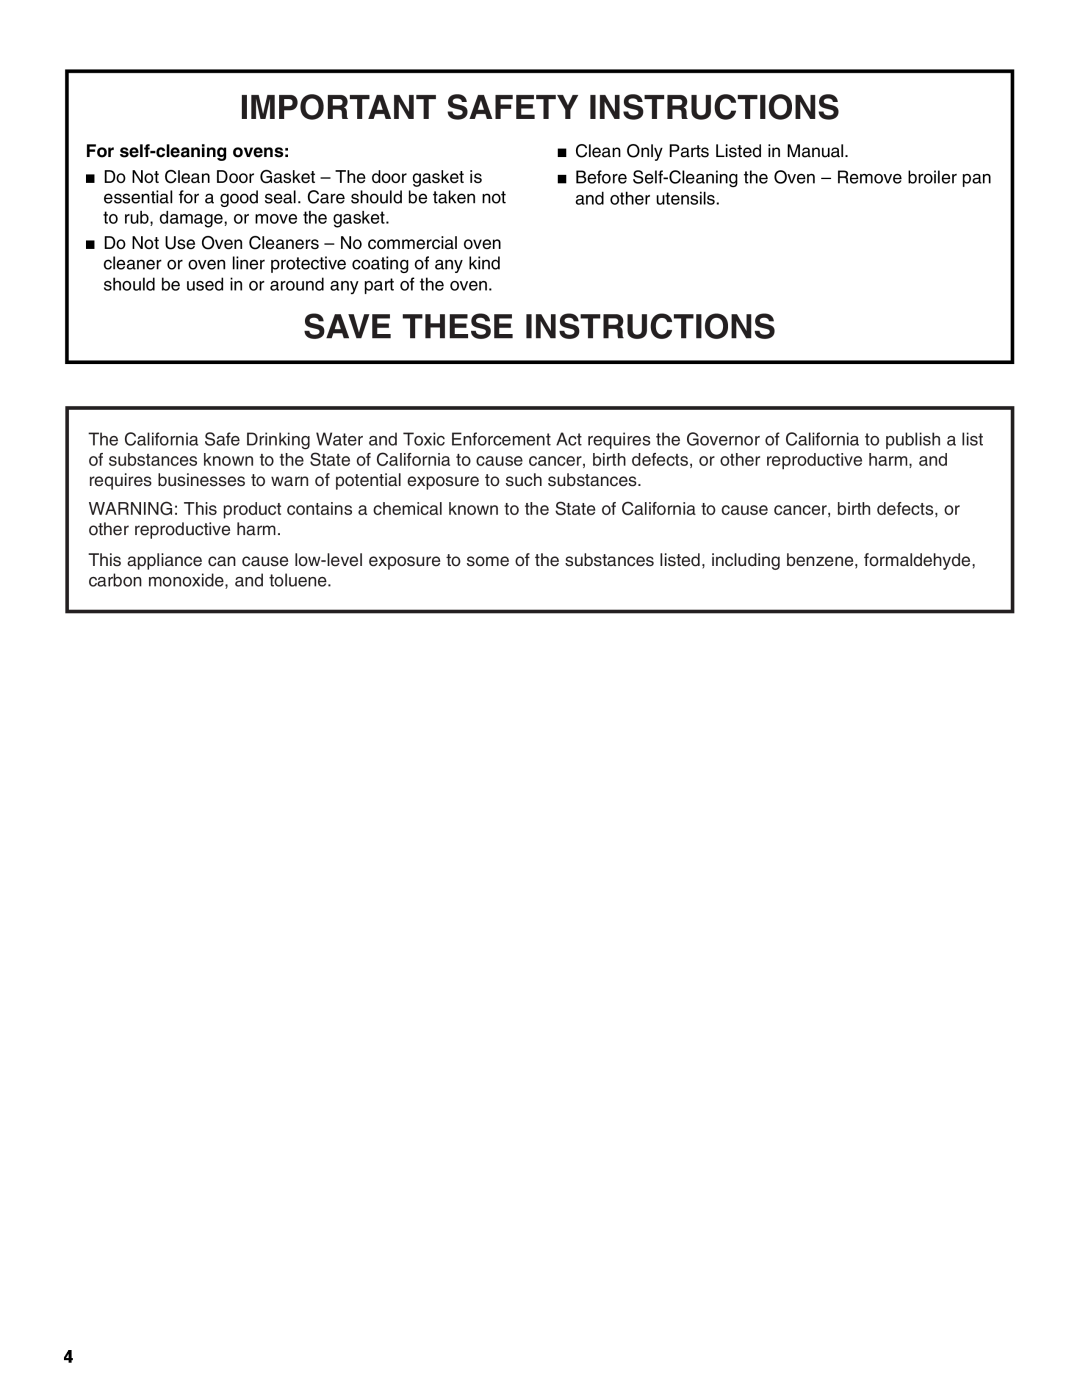 KitchenAid KEBC101, KEBC206, KEBC171, KEB276 For self-cleaning ovens, Important Safety Instructions, Save These Instructions 